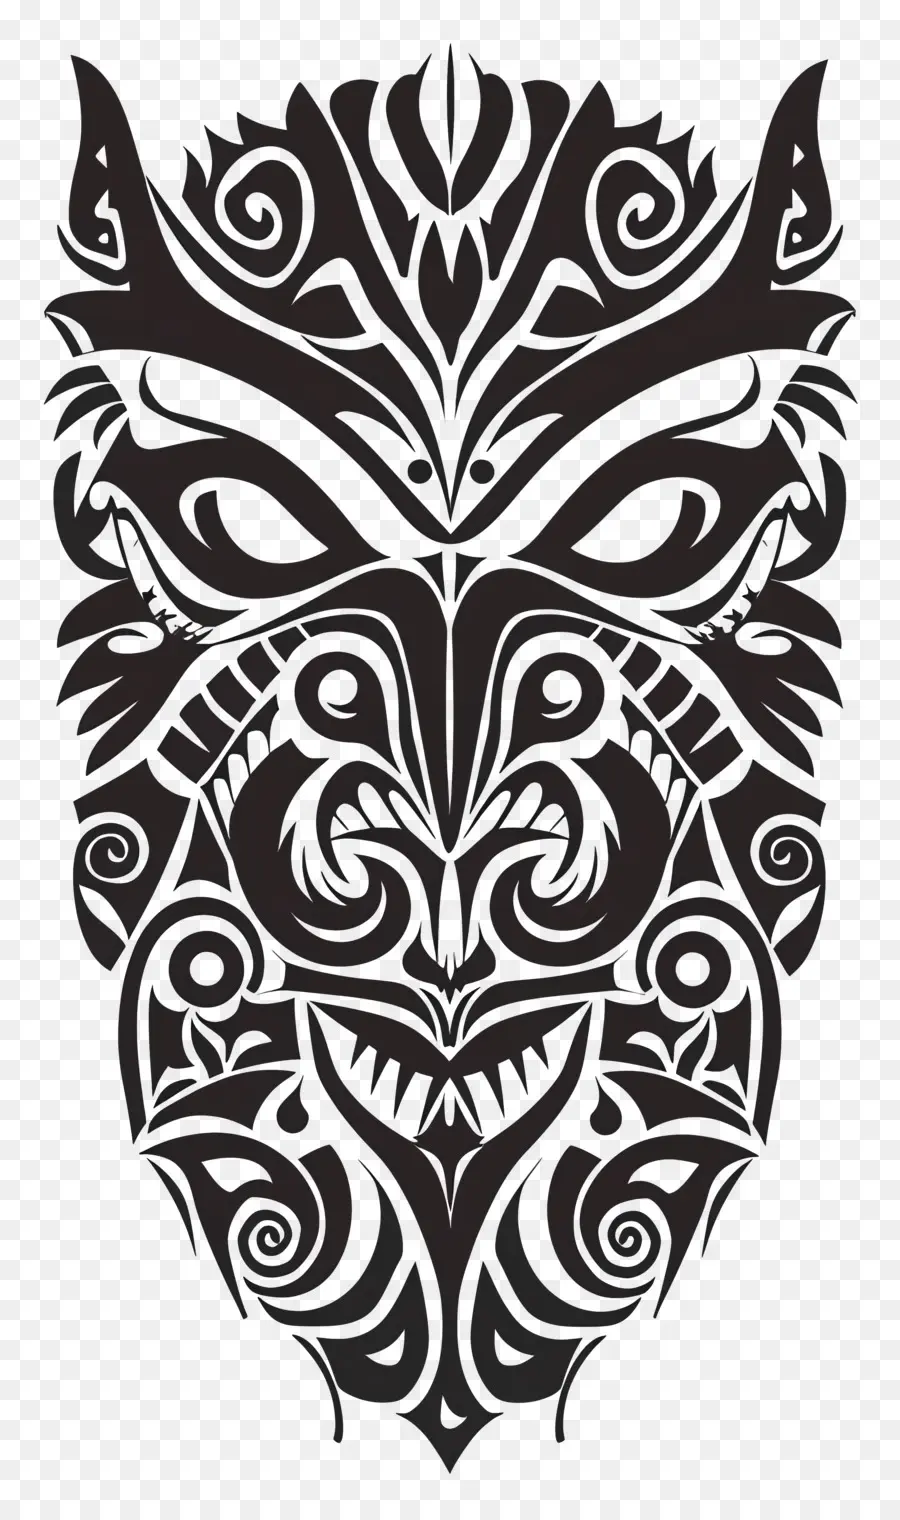 Suku Maori Tato，Tribal Tato PNG